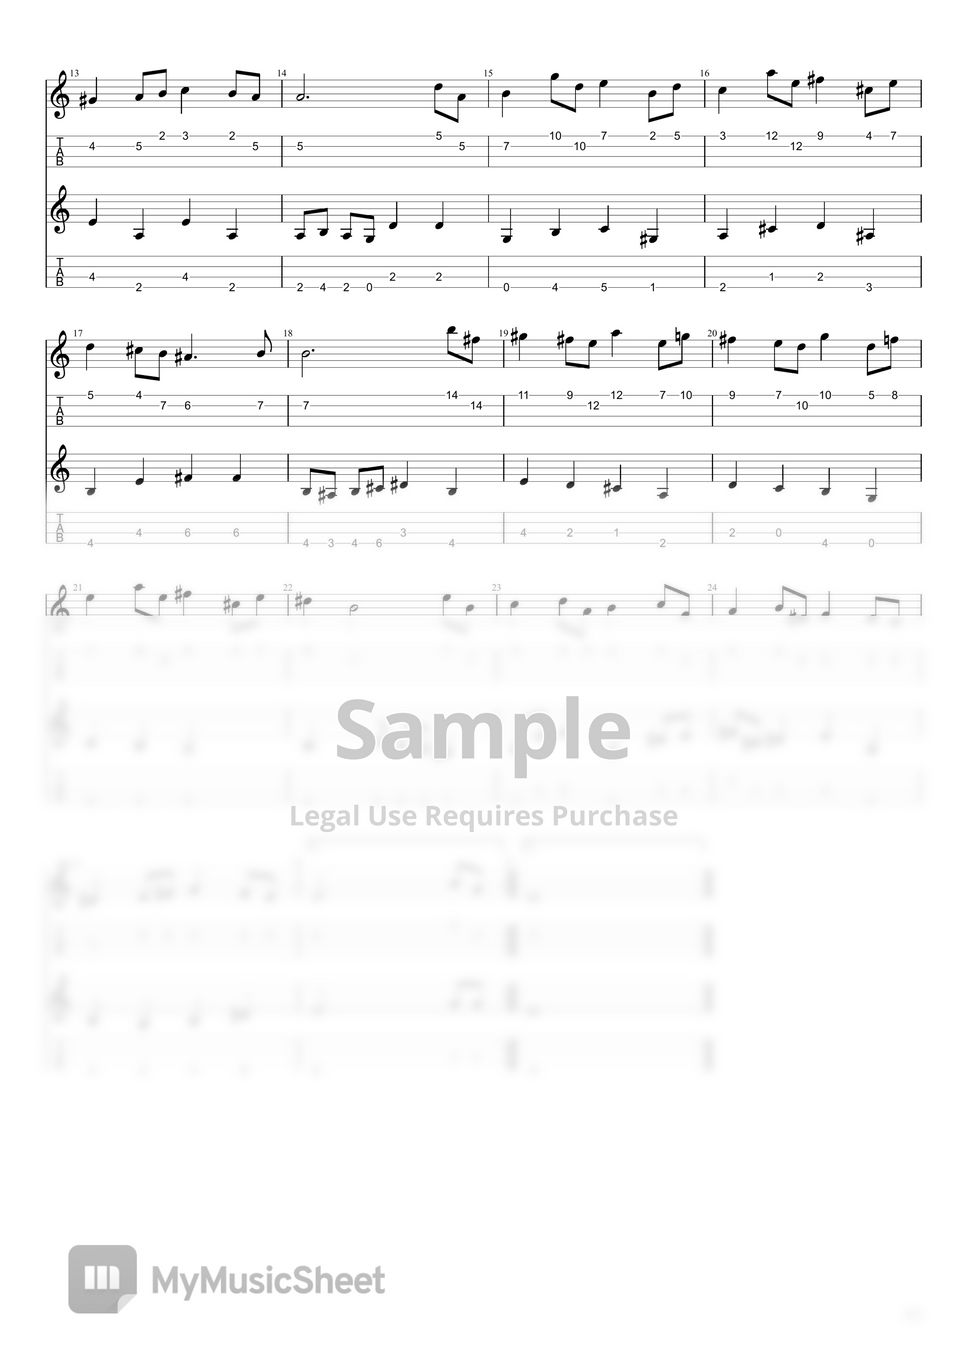 Johann Sebastian Bach - Bouree In E Minor (Ukulele Duet (우쿨렐레 듀엣)) by YunJun(조각나암)